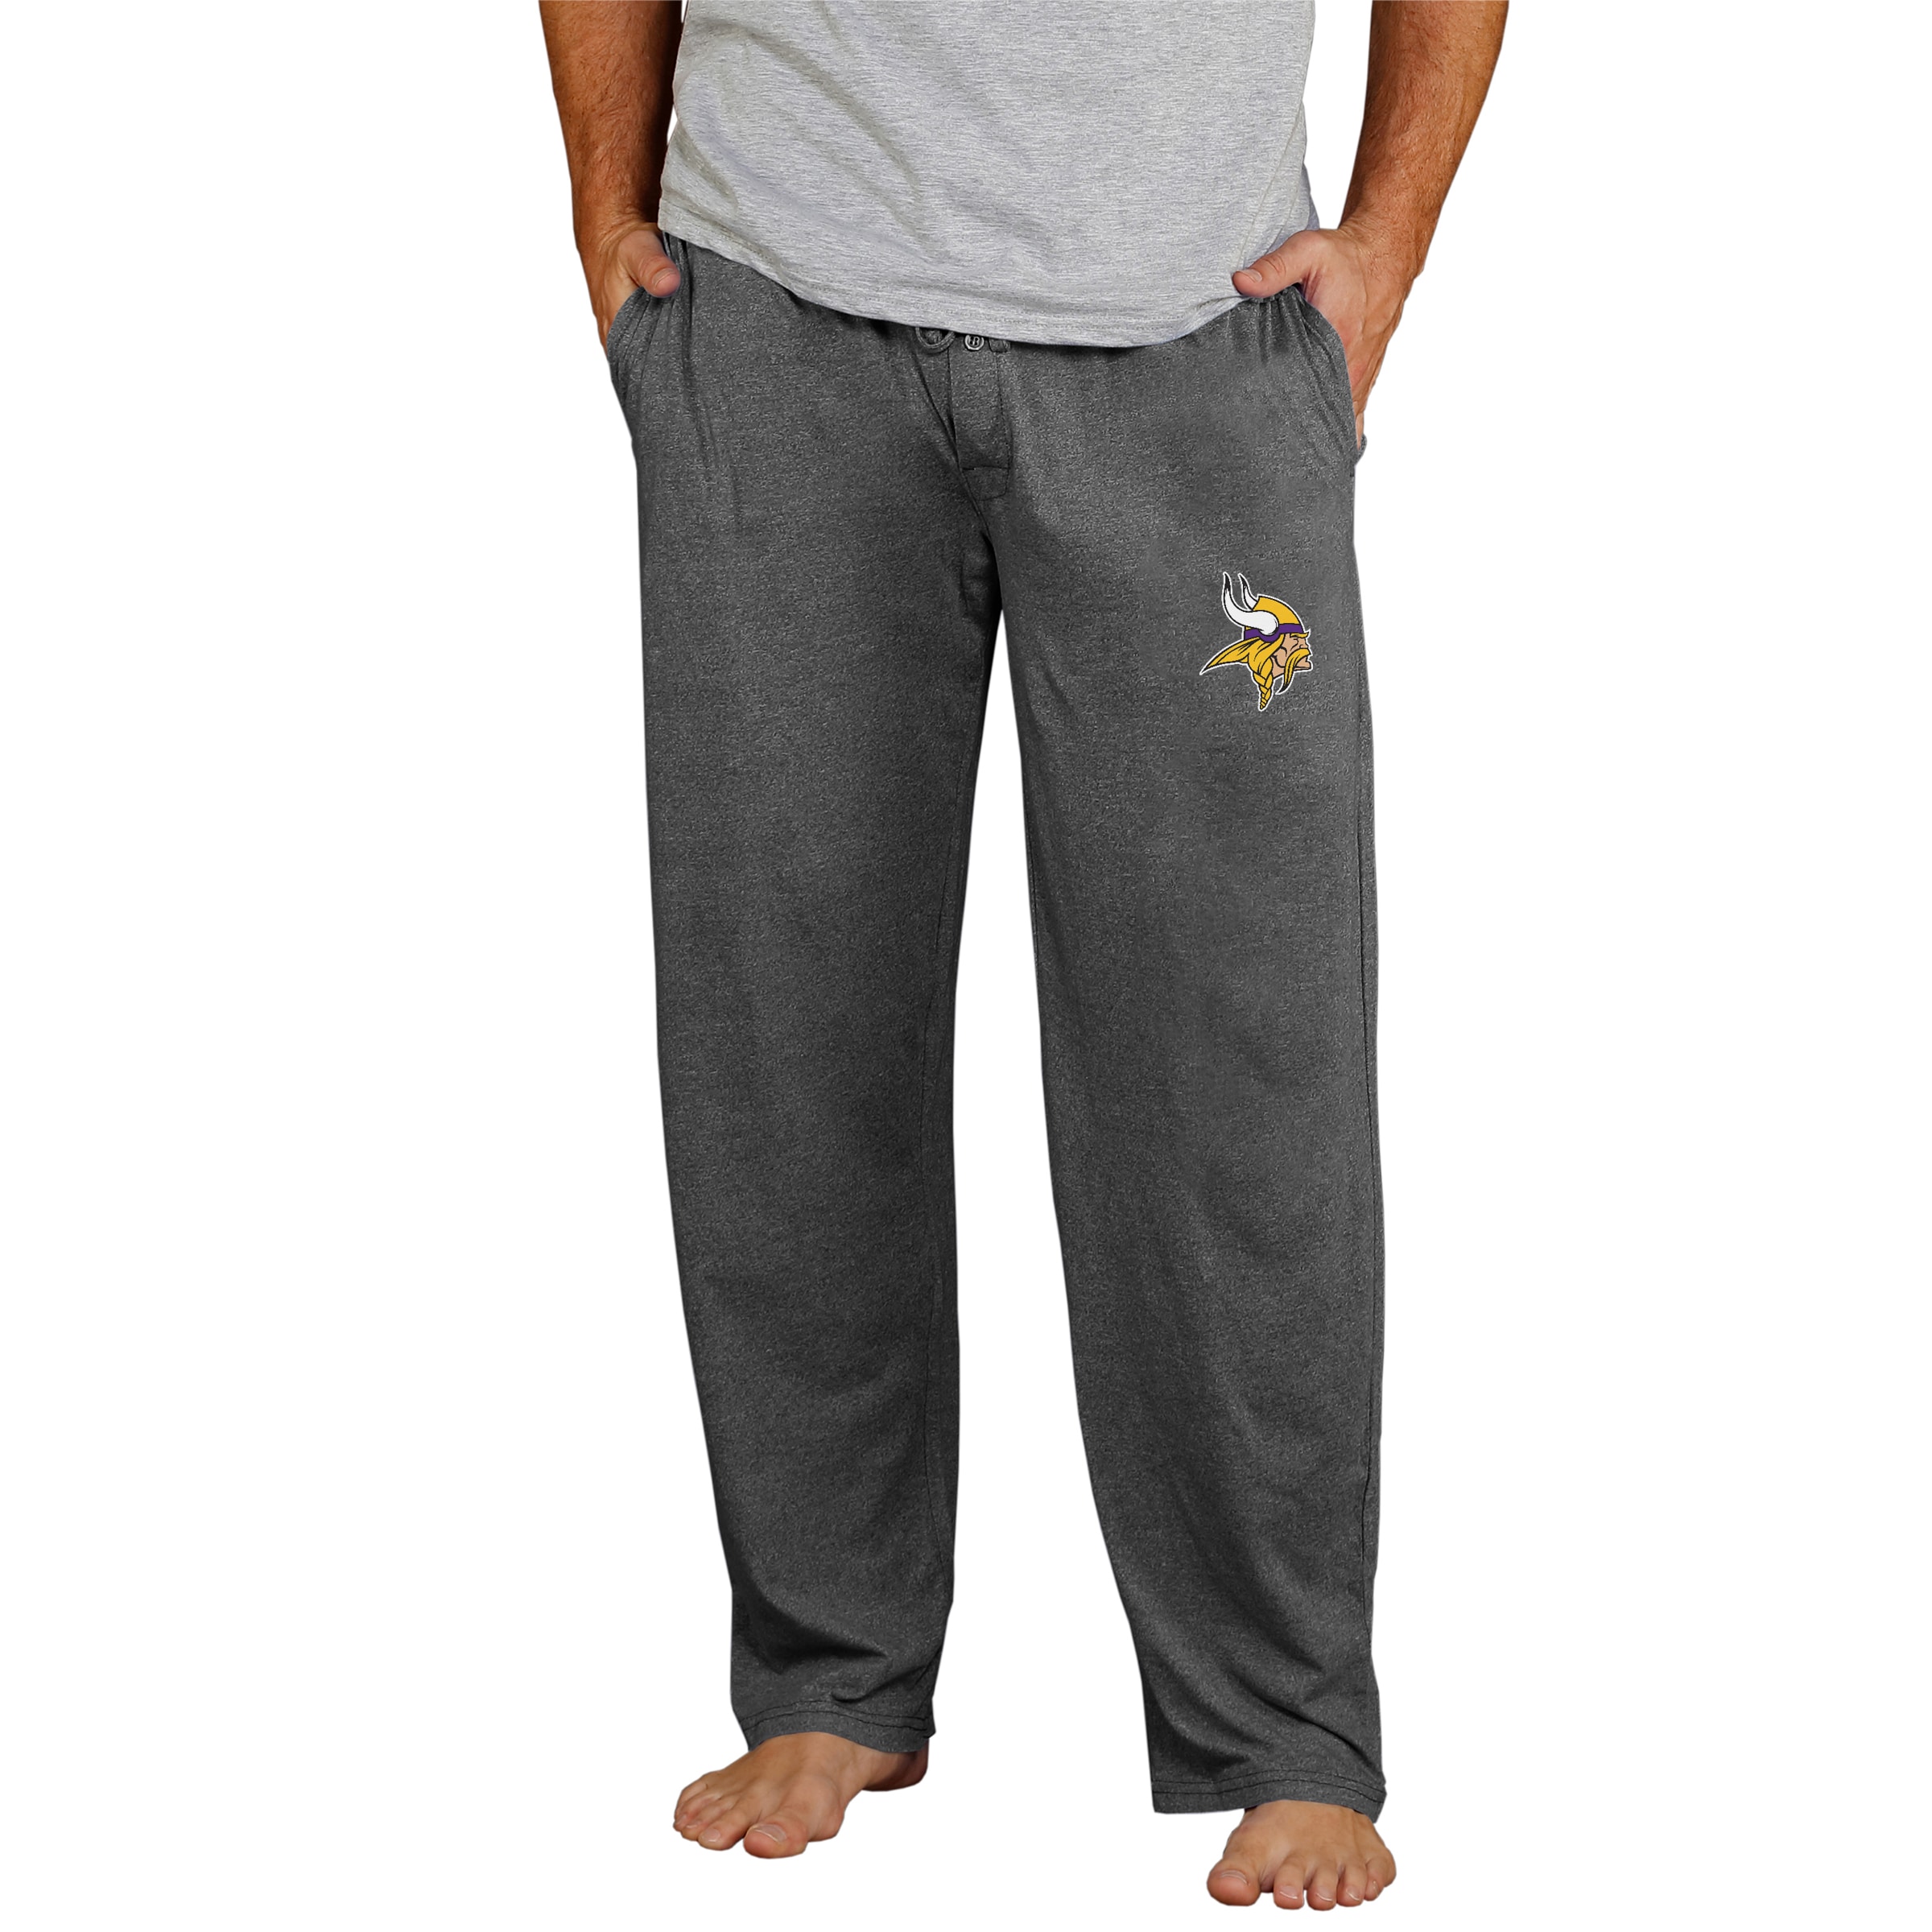 Men's Concepts Sport Charcoal Minnesota Vikings Lightweight Quest Knit Sleep Pants - image 1 of 1